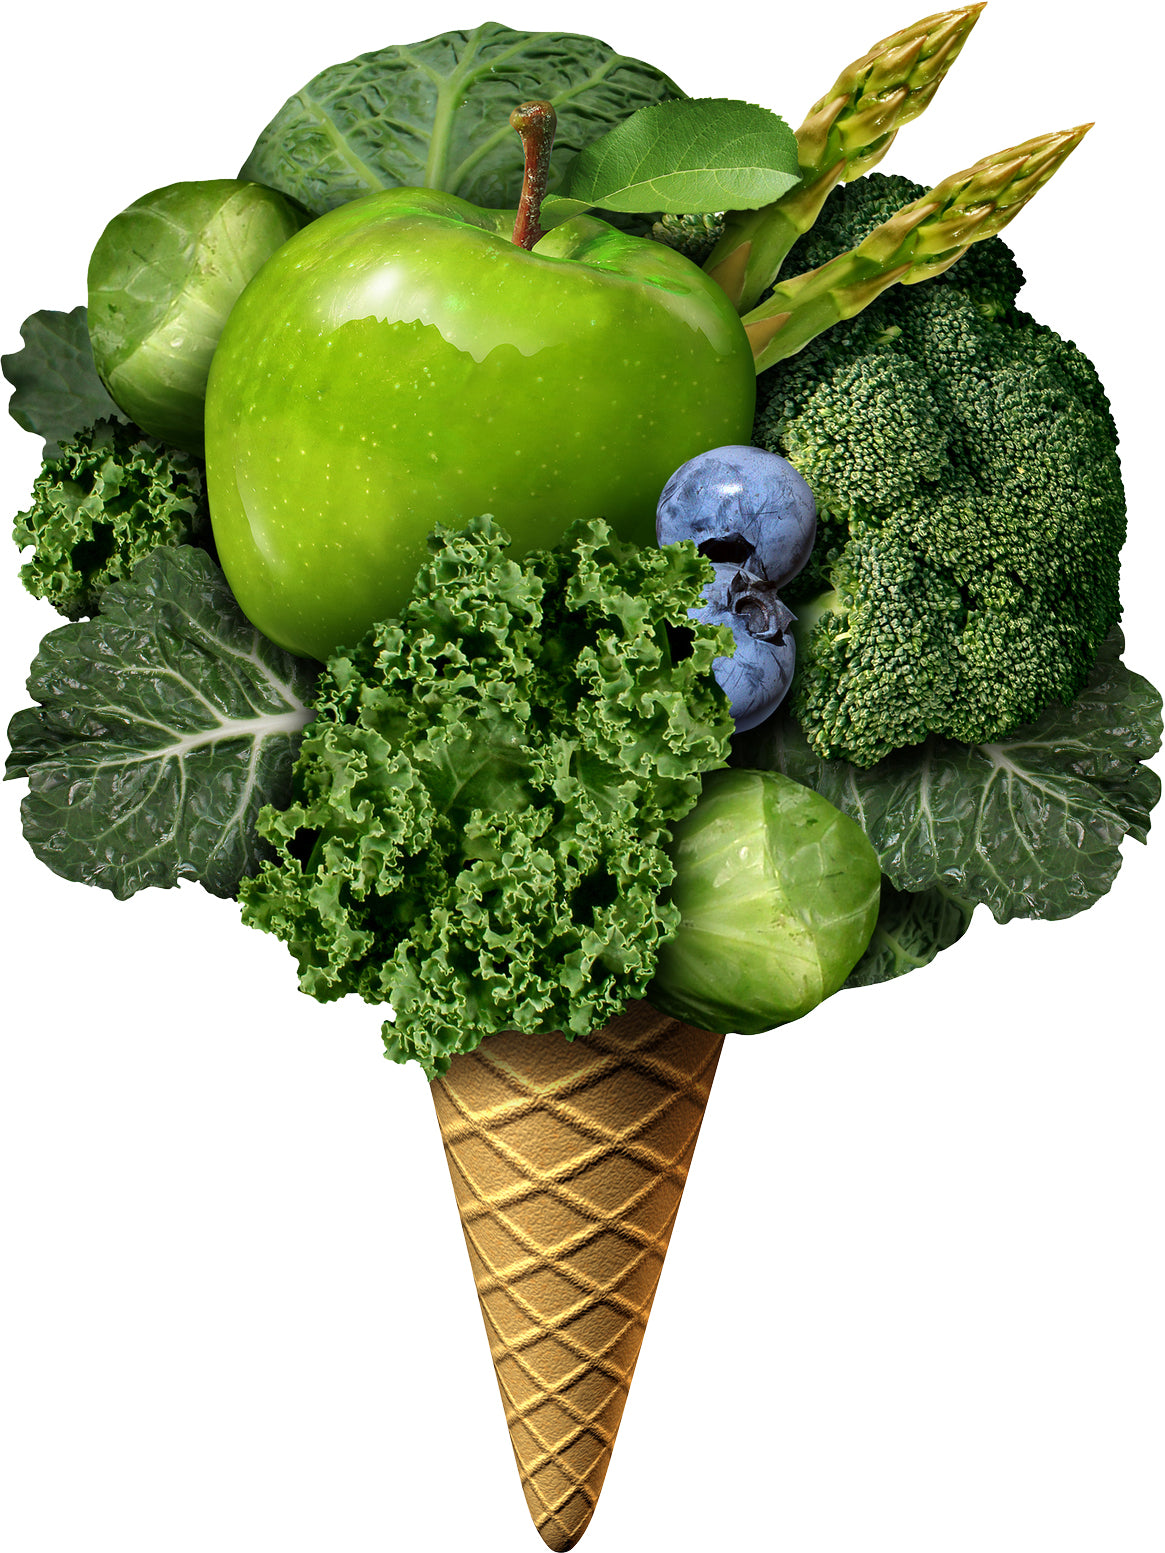 Cool Scoop of Food in Ice Cream Cone Art - Healthy Greens Vinyl Sticker